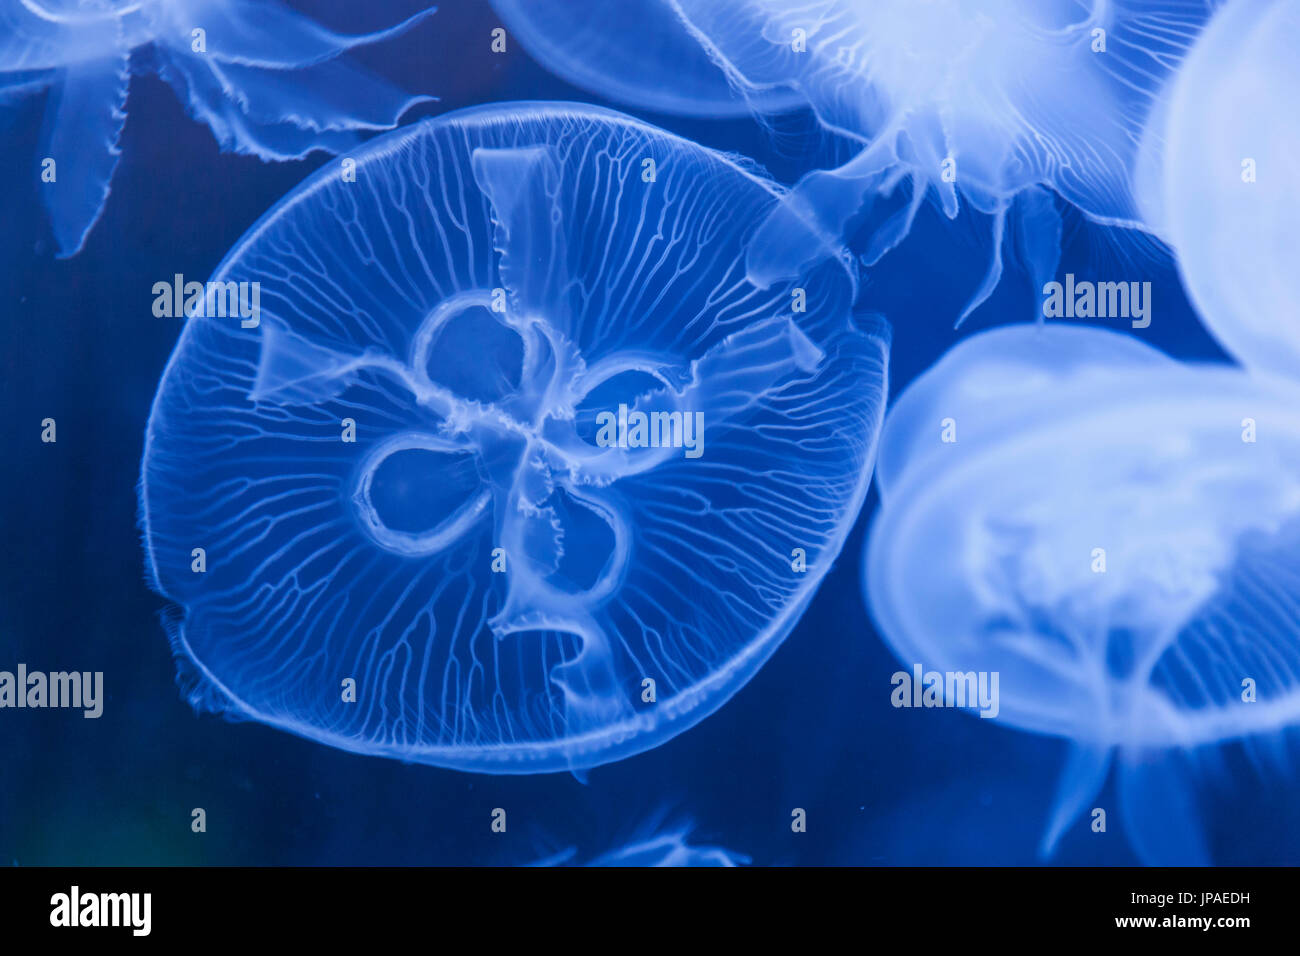 England, East Yorkshire, Kingston upon Hull, The Deep, Moon Jellyfish Stock Photo